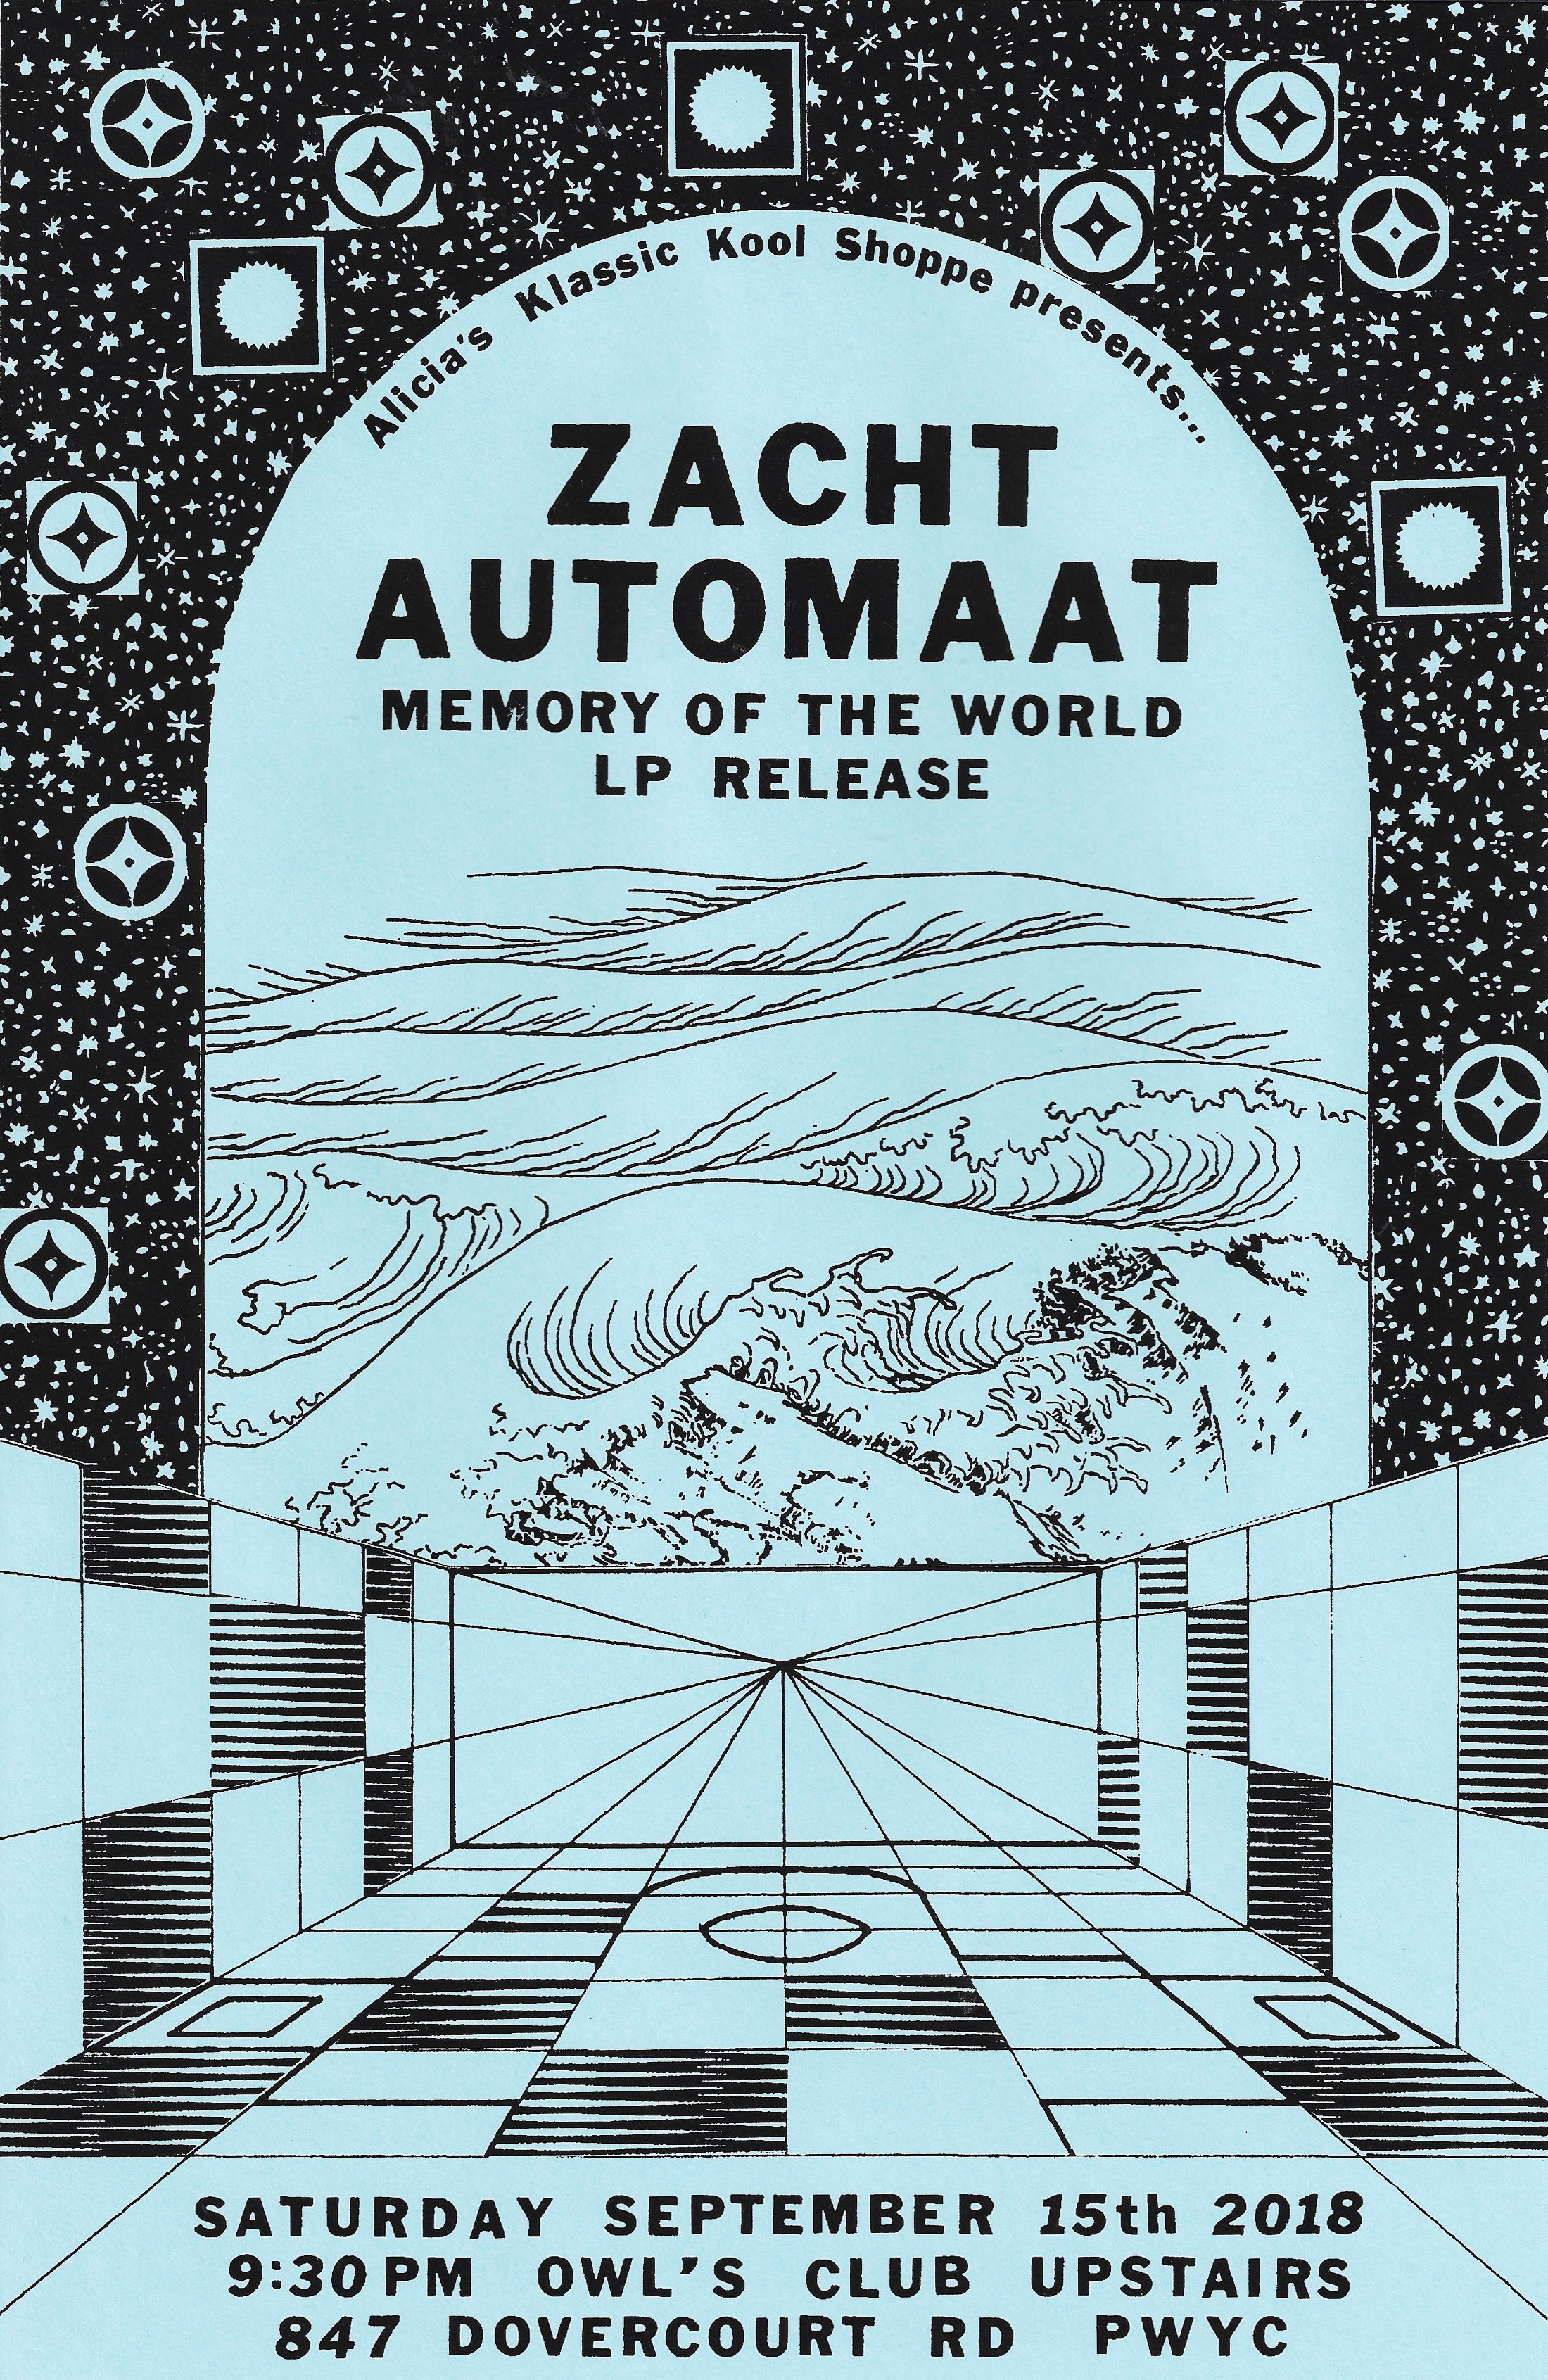  Zacht Automaat Memory of the World LP release  screenprint  11” x 17”  2018 